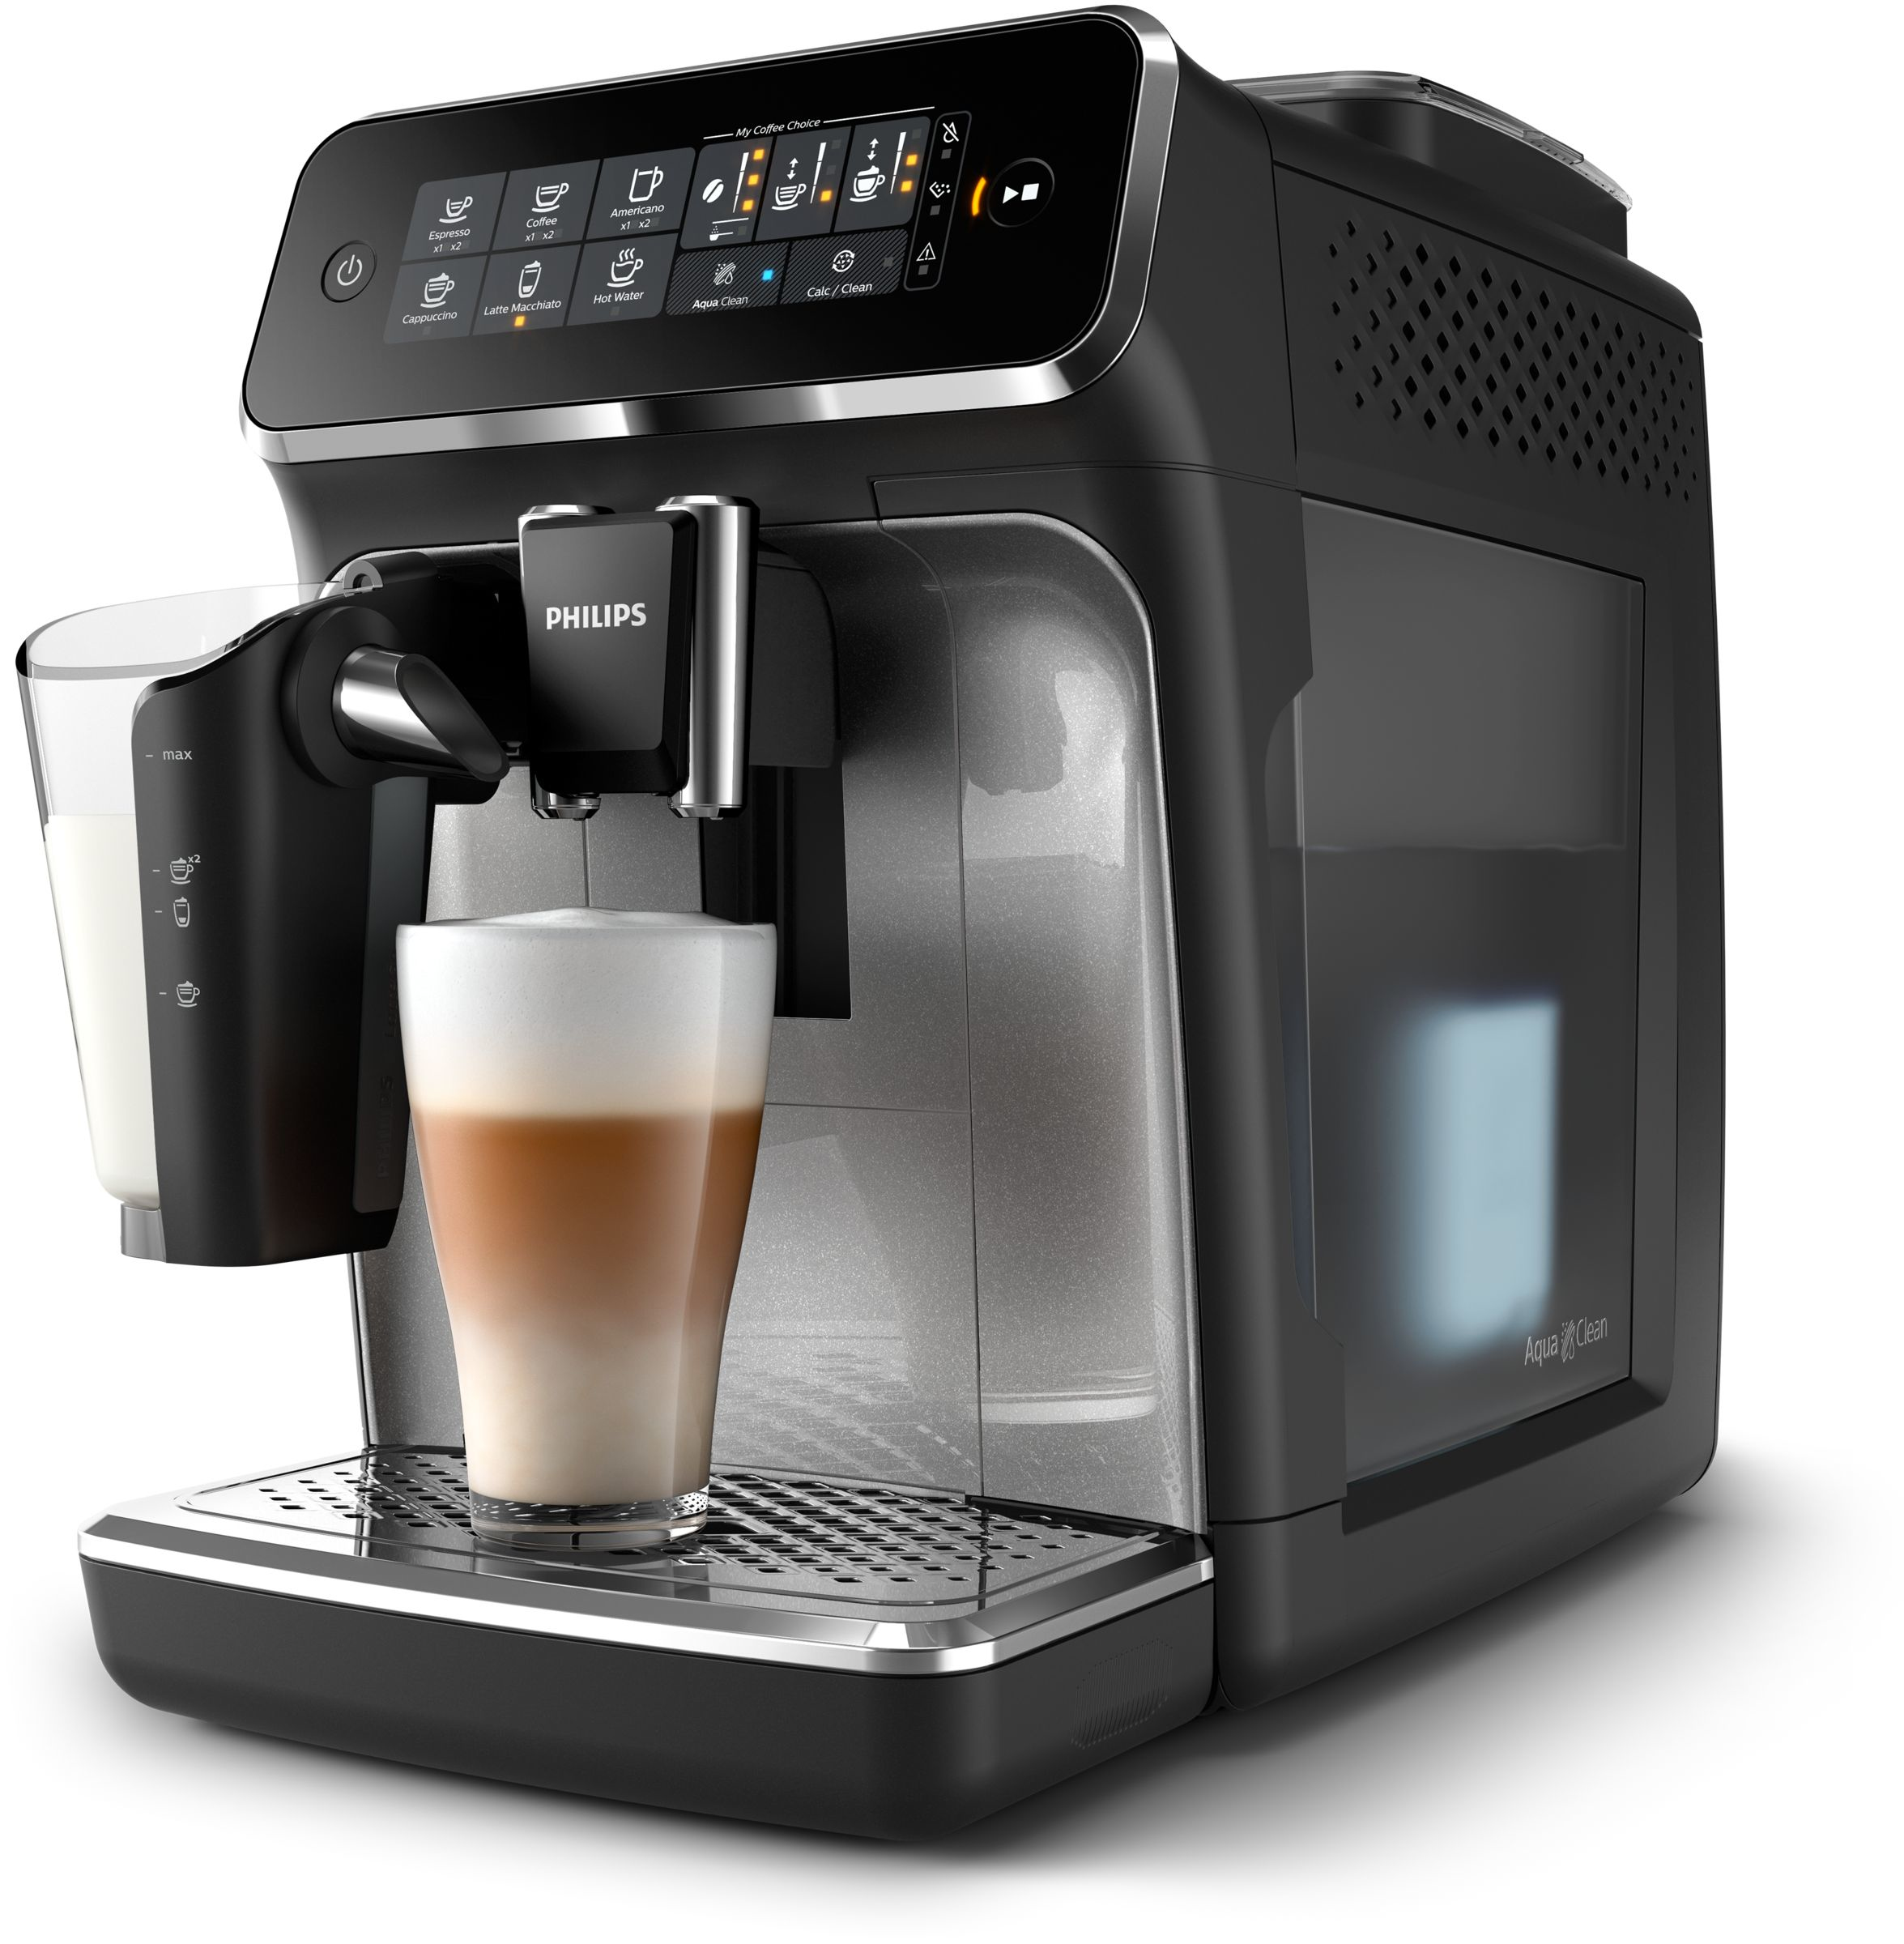 Philips 3200 series EP3246/72 coffee maker